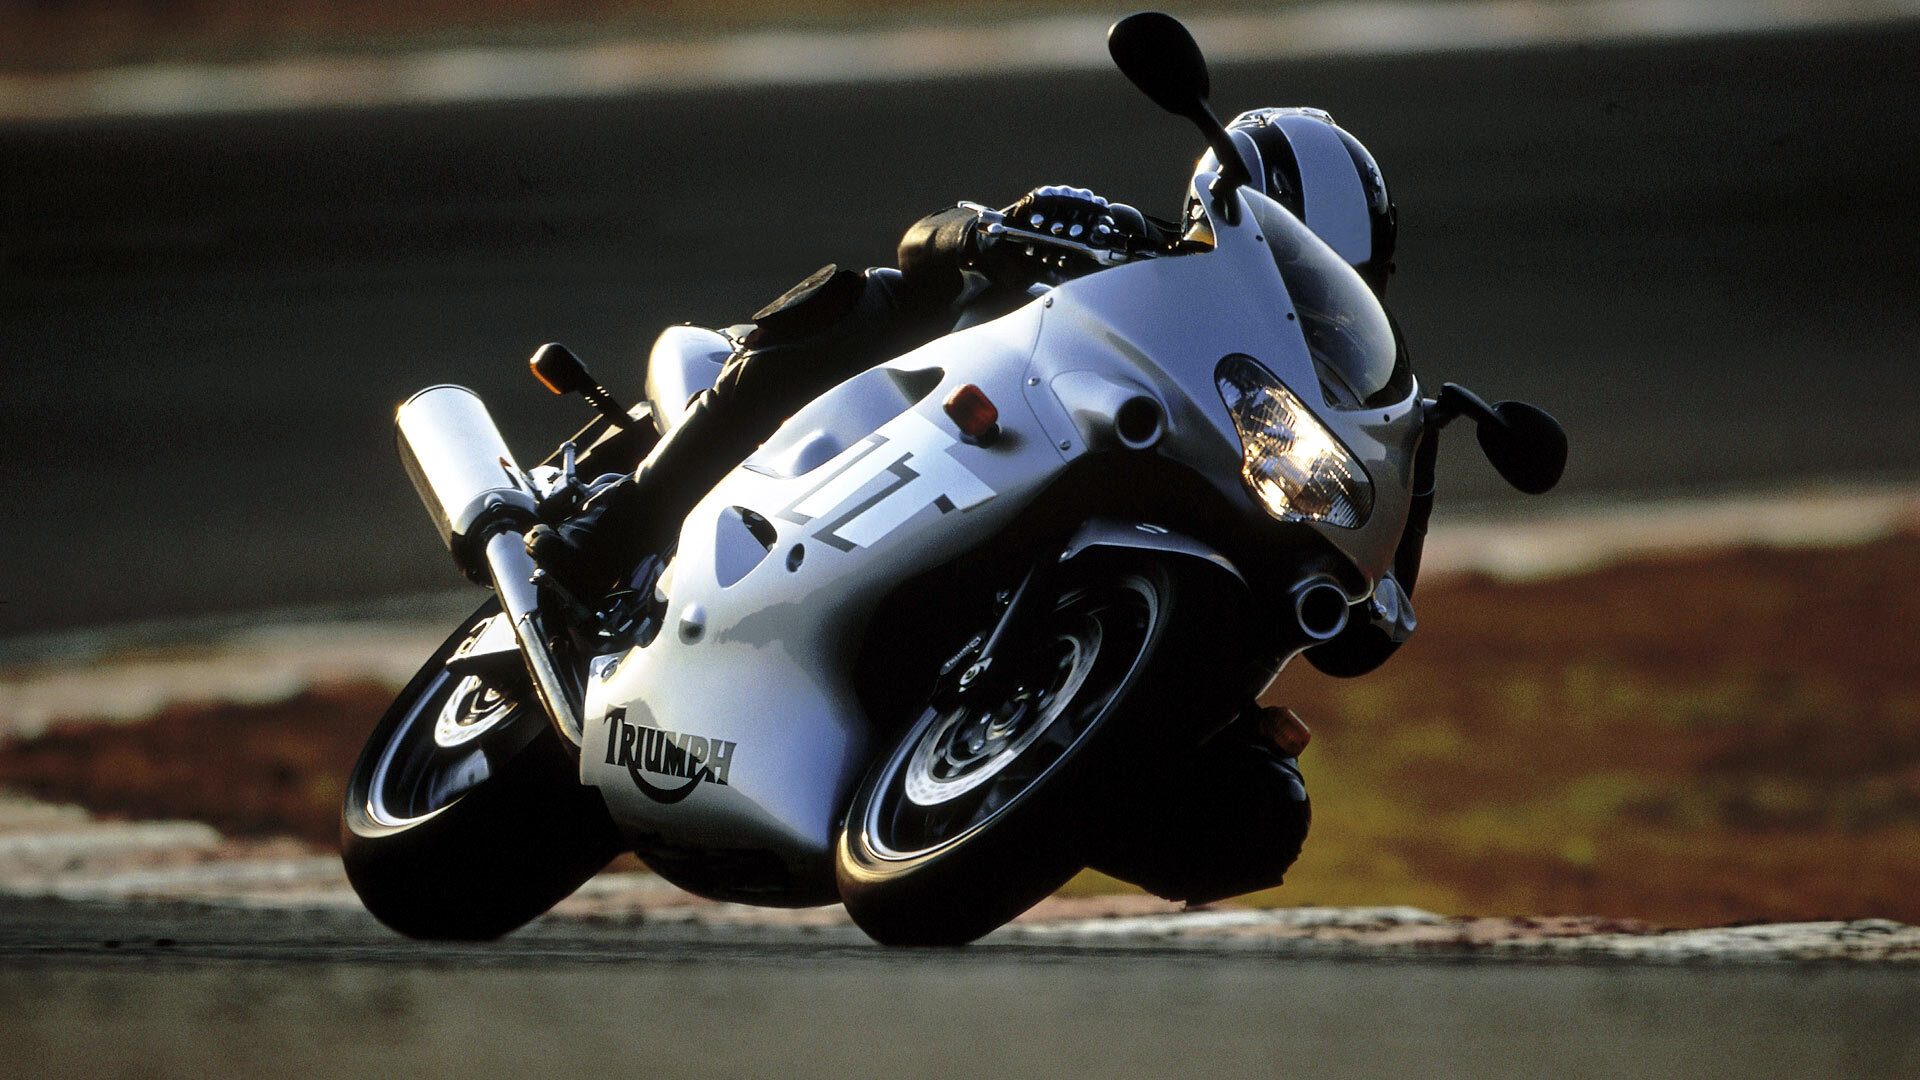 Moto del día: Triumph TT 600